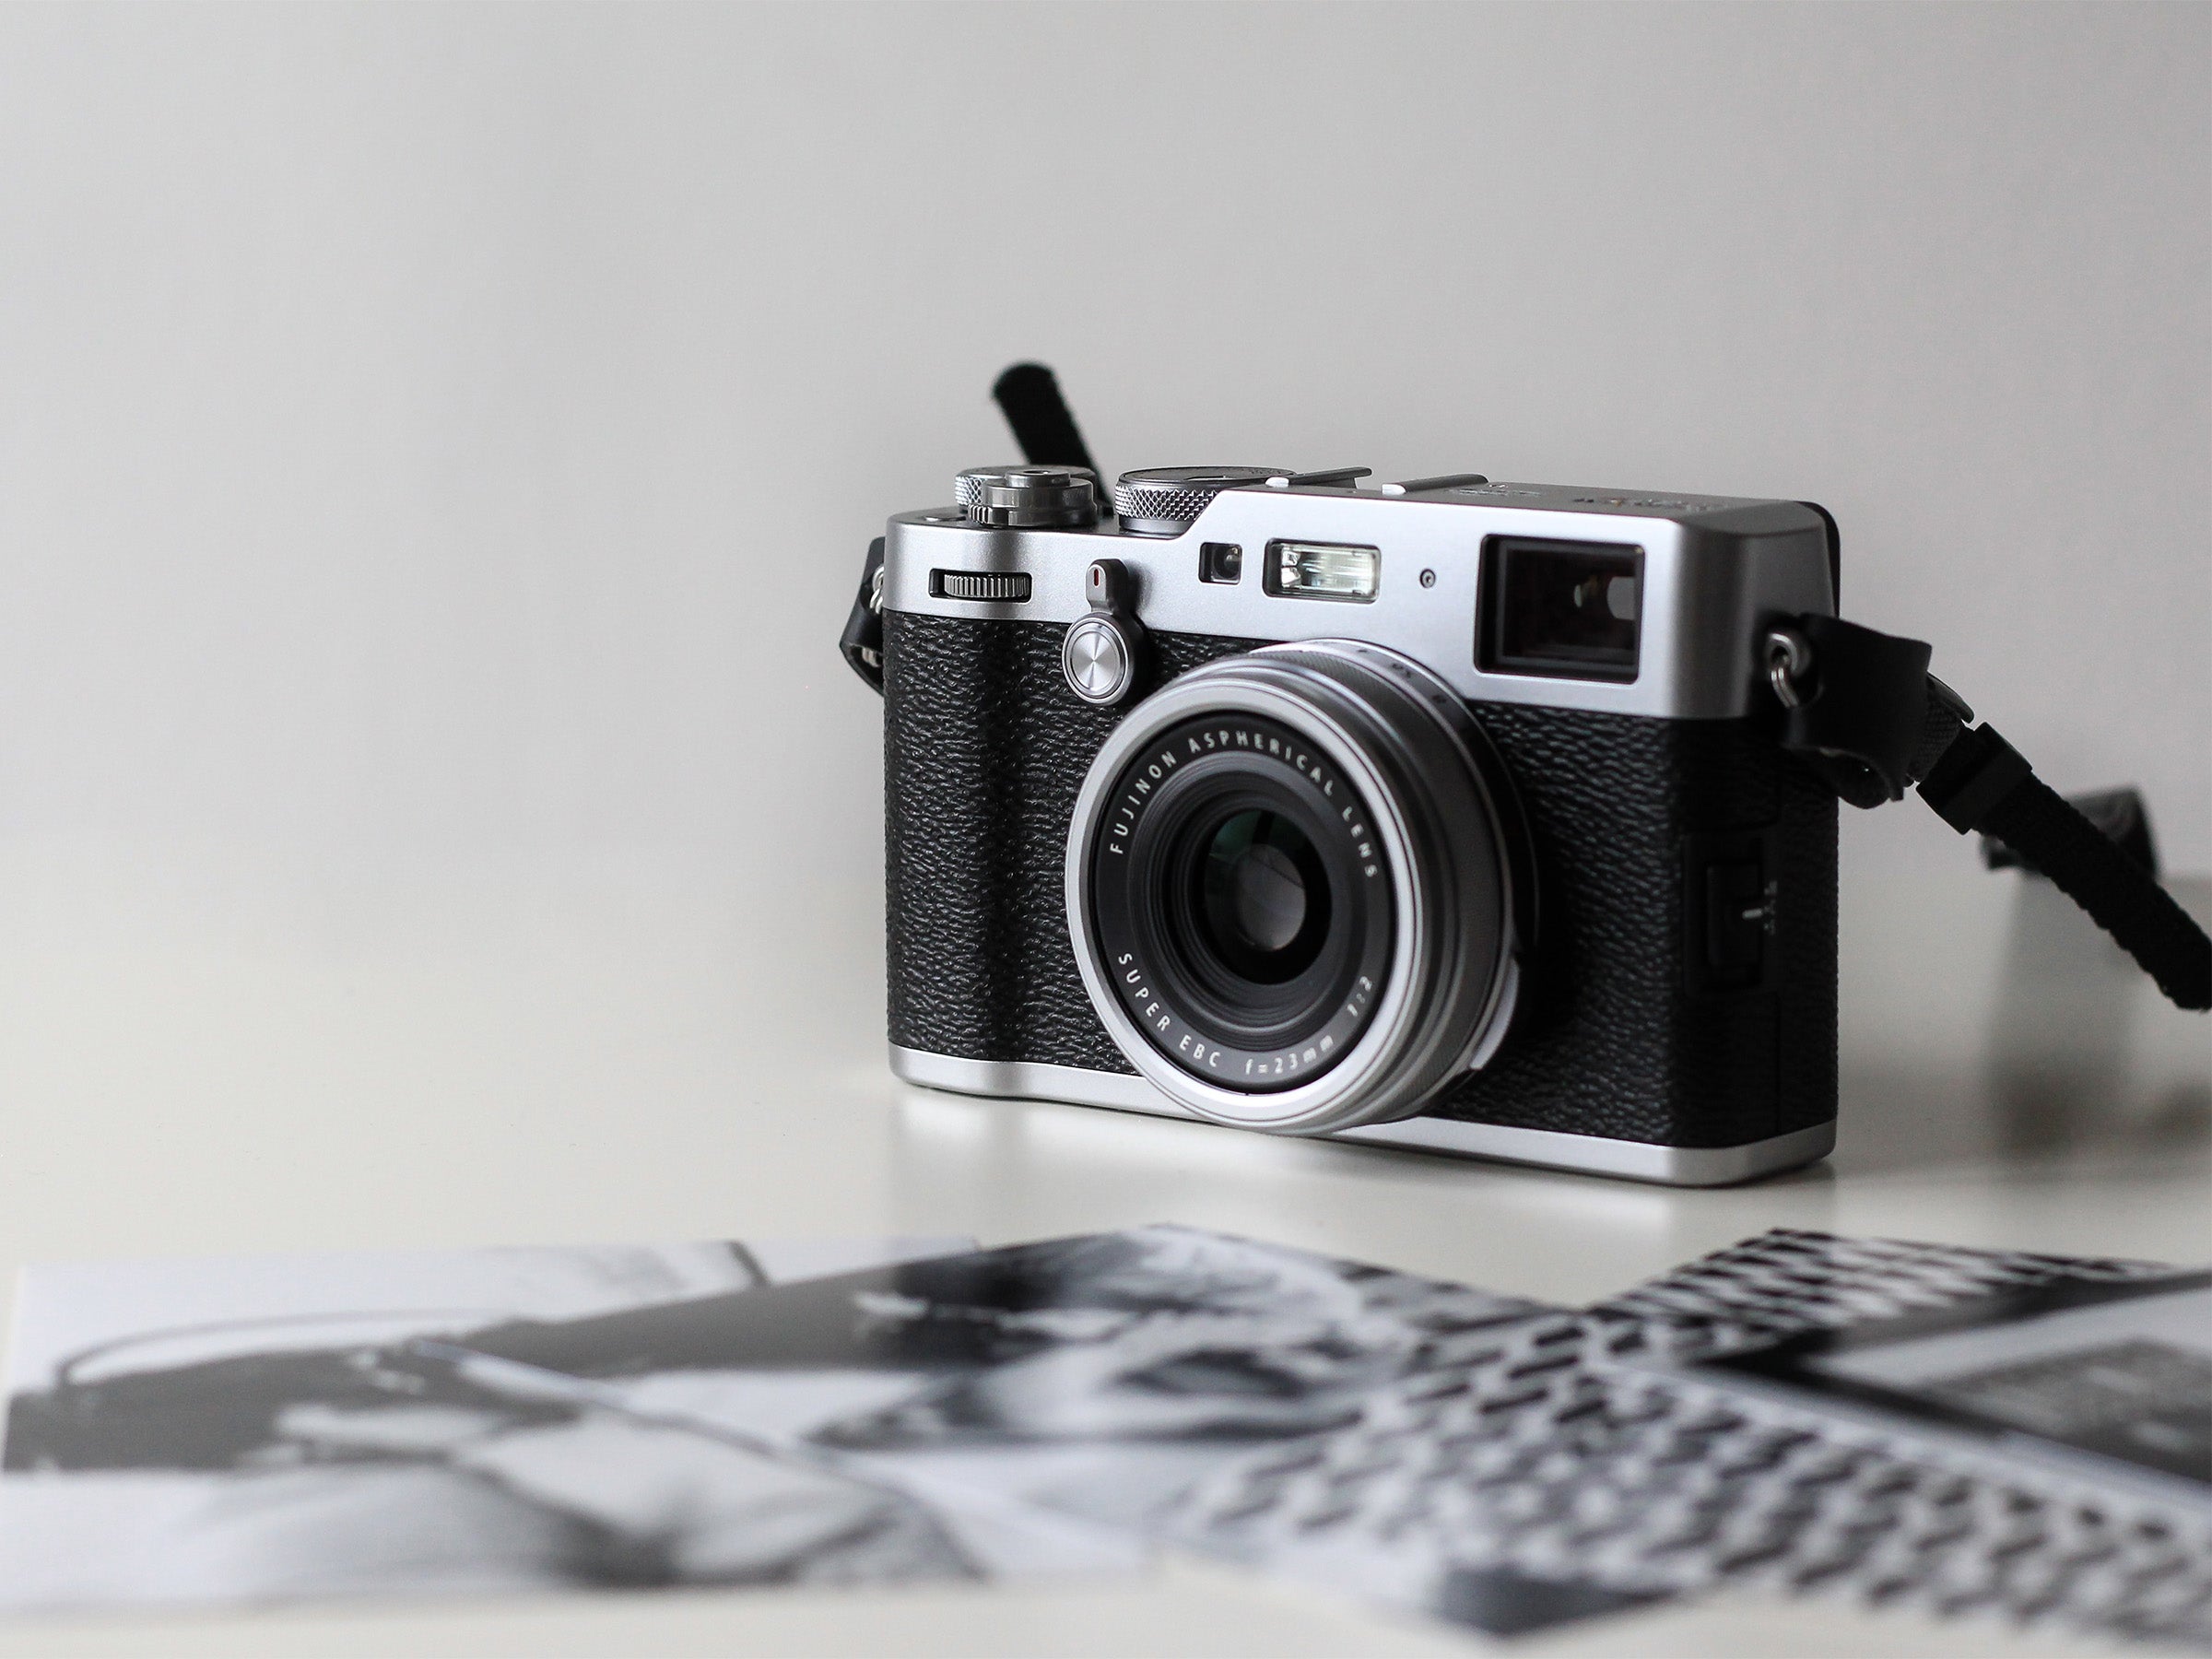 #Kamera neu gedacht: Diese Kamera erzeugt Fotos mit KI ohne Objektiv